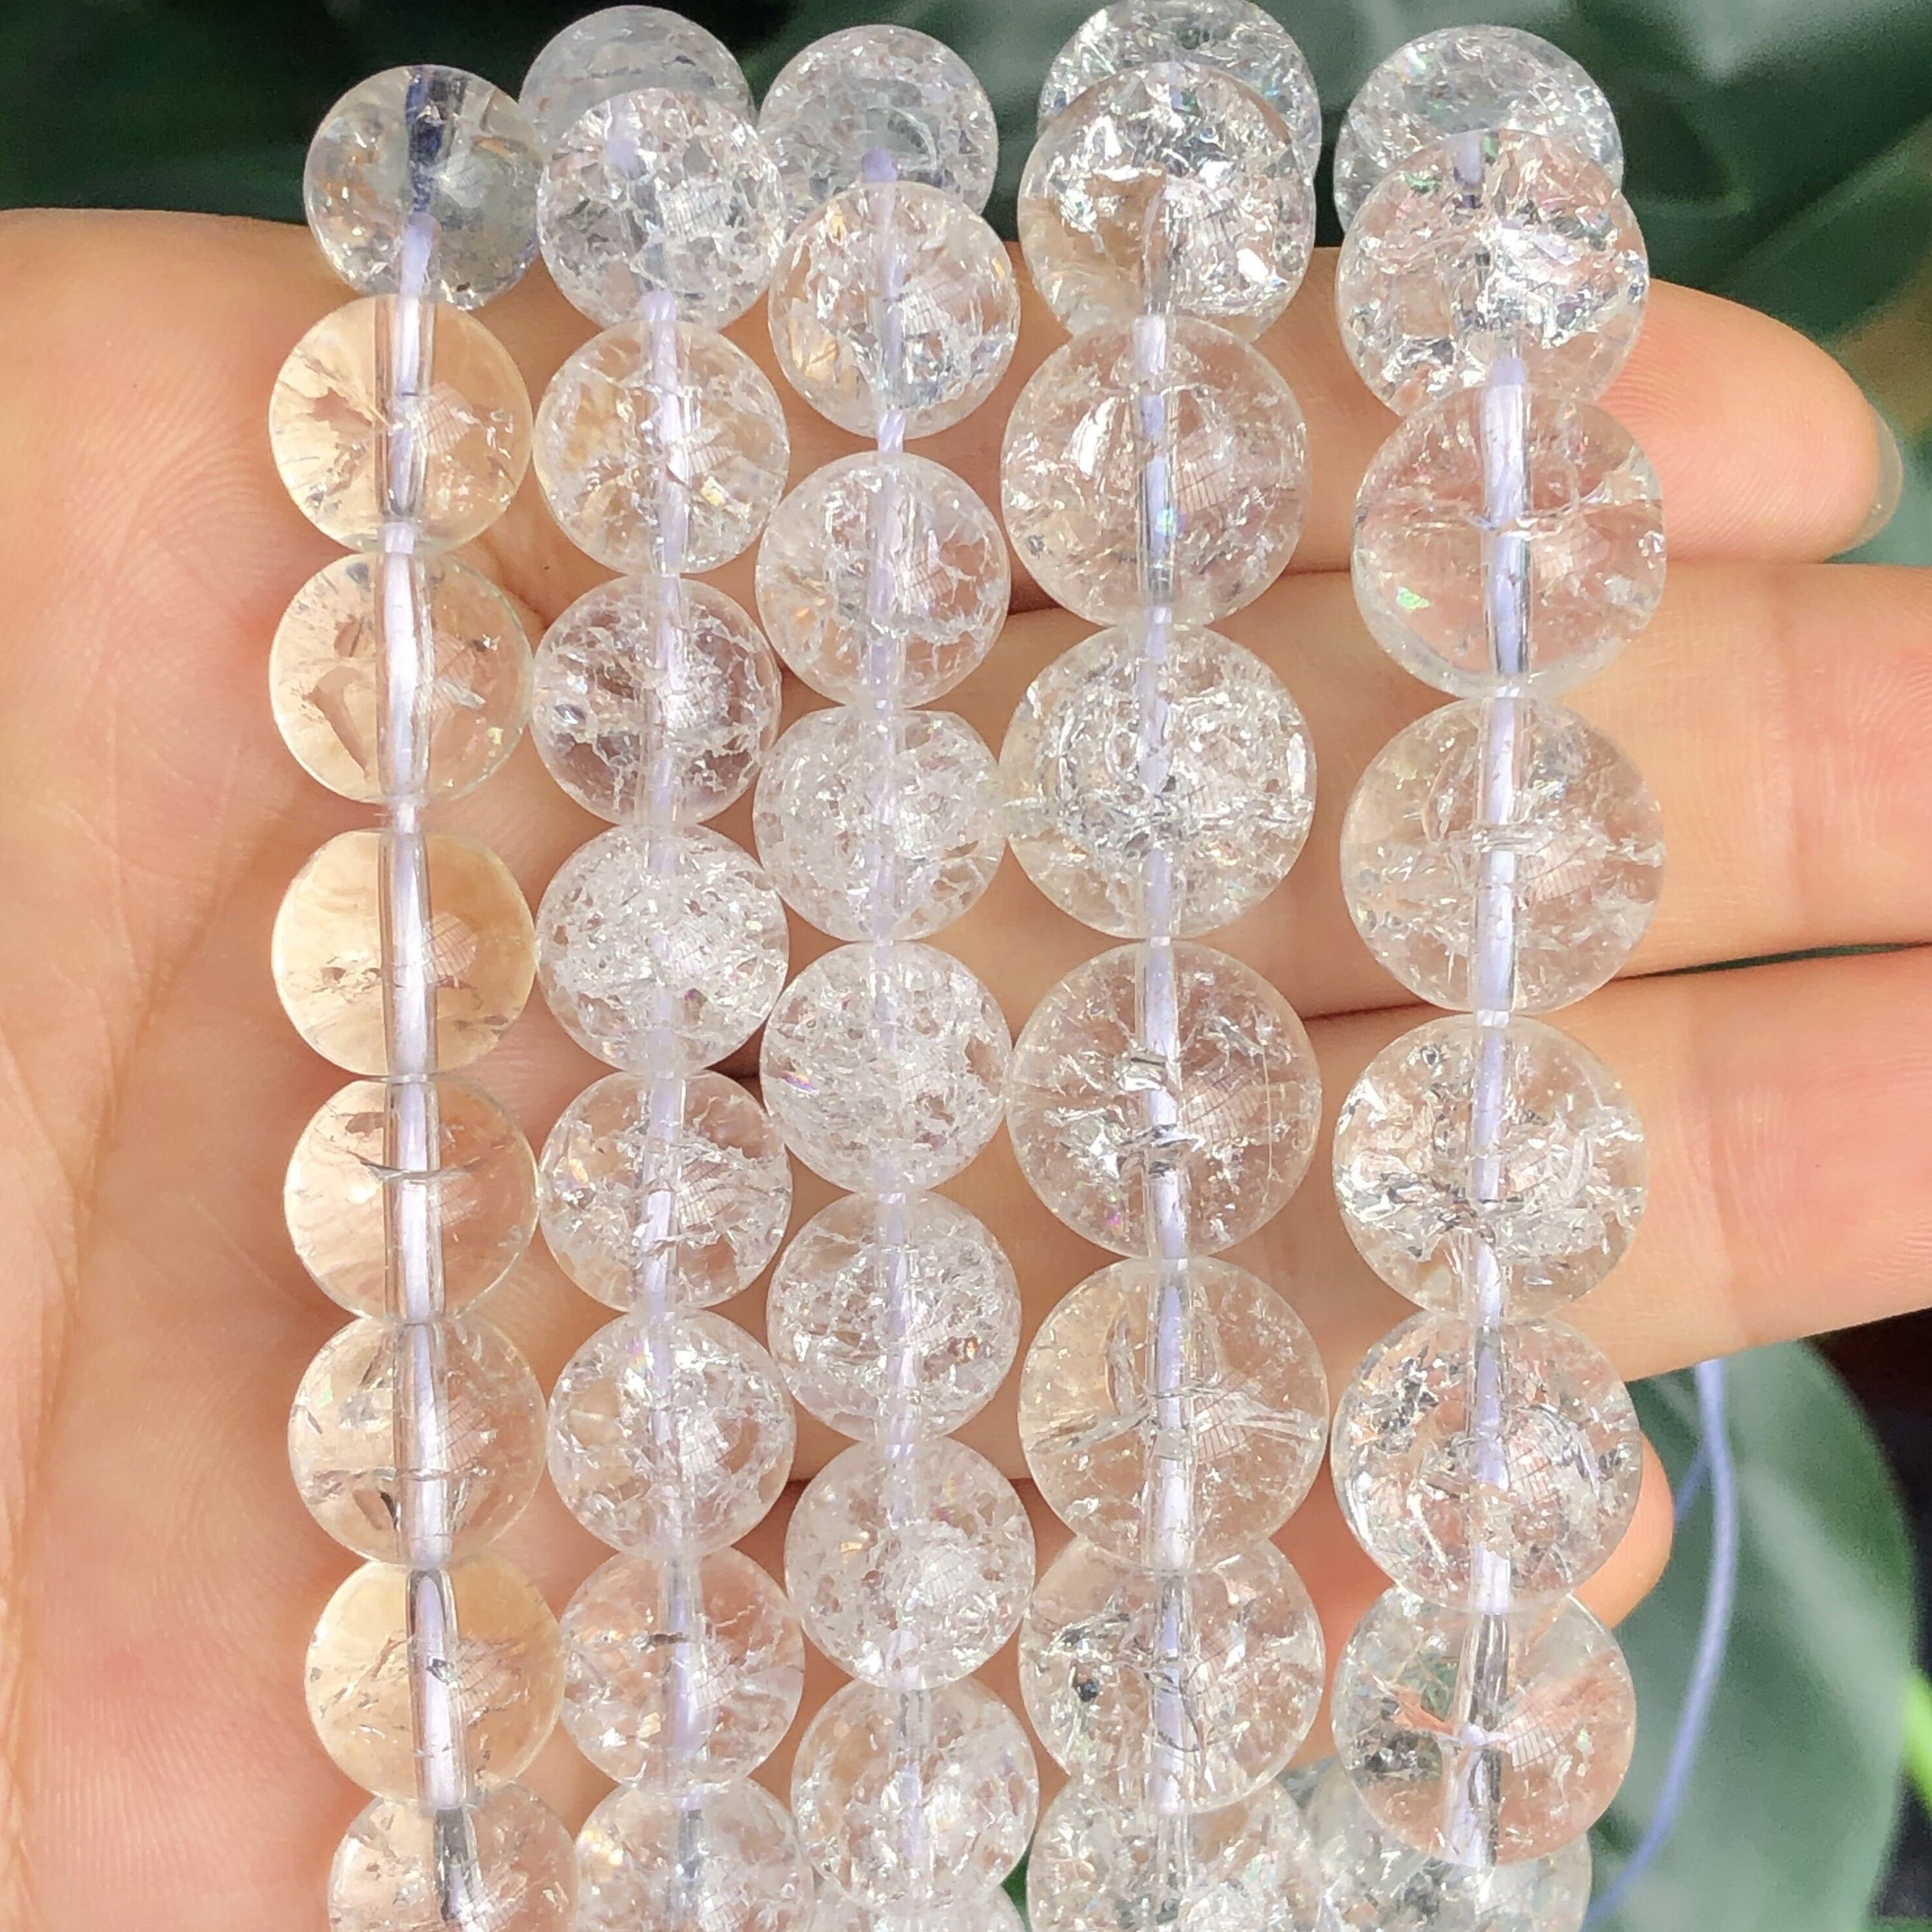 Rock Crystal Beads, Quartz Beads